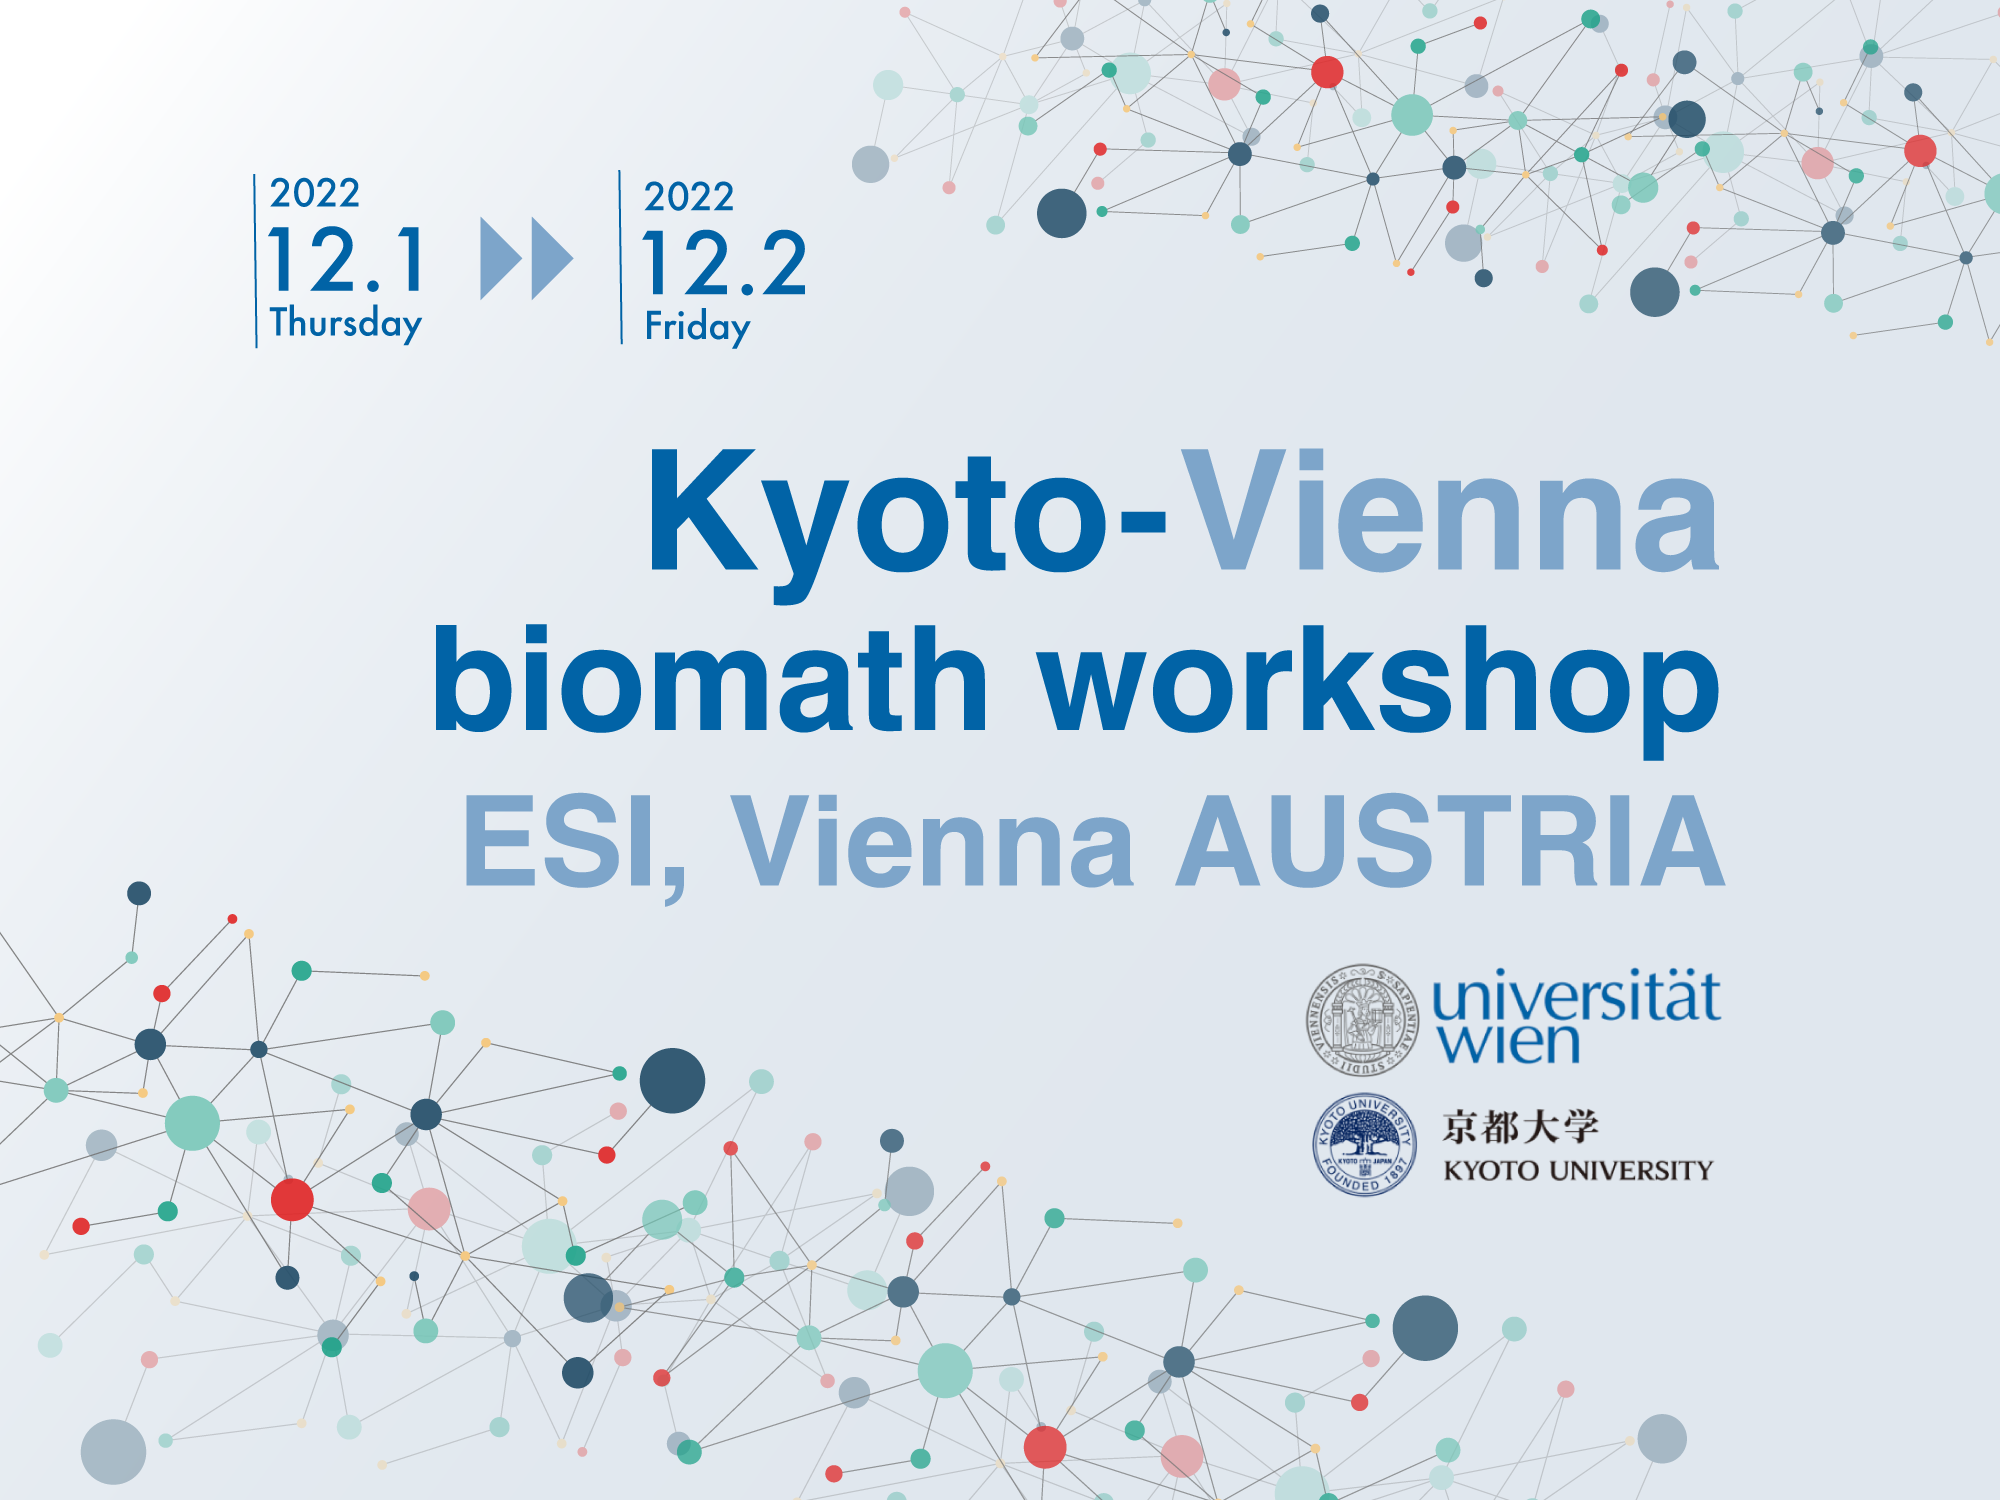 Kyoto-Vienna biomath workshop will be held on 1 – 2 December 2022